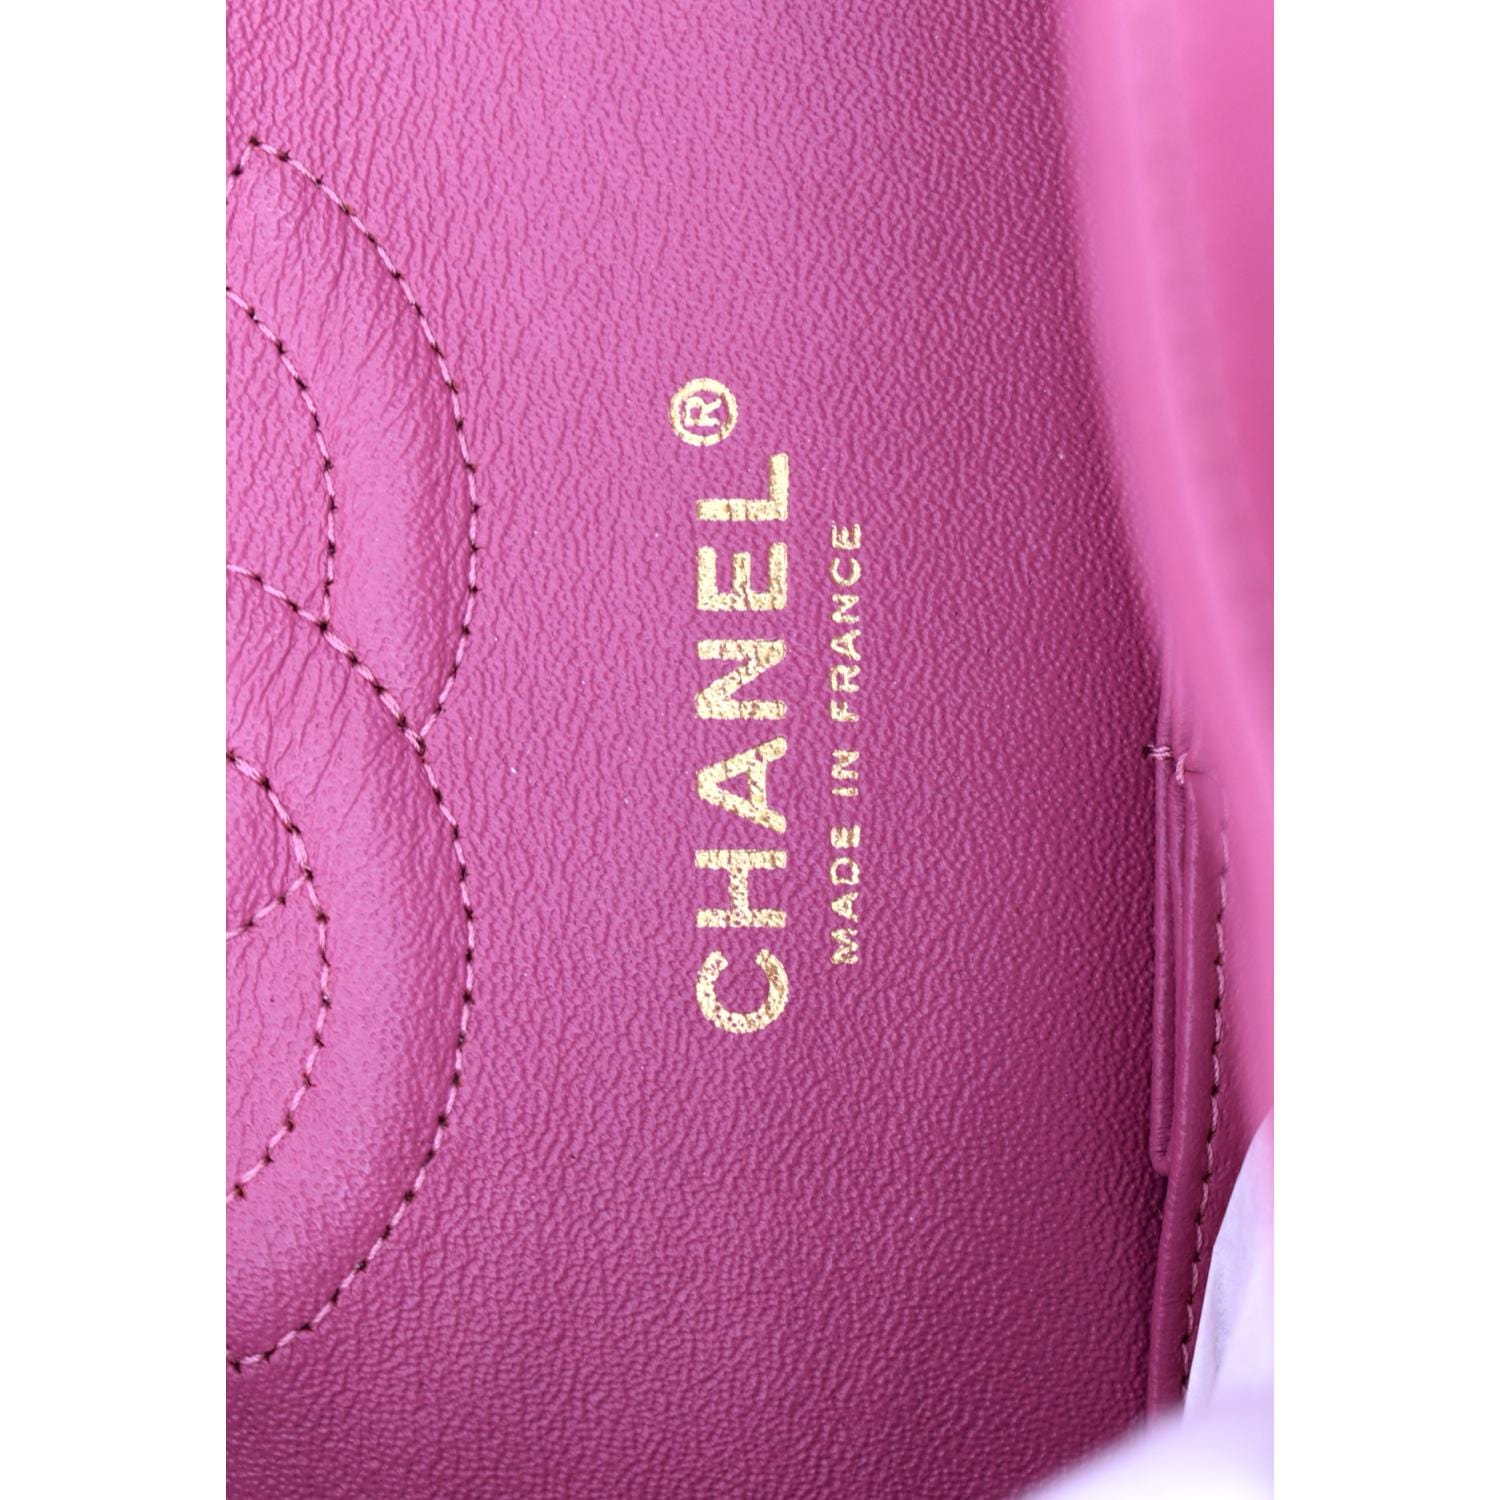 used pink chanel bag